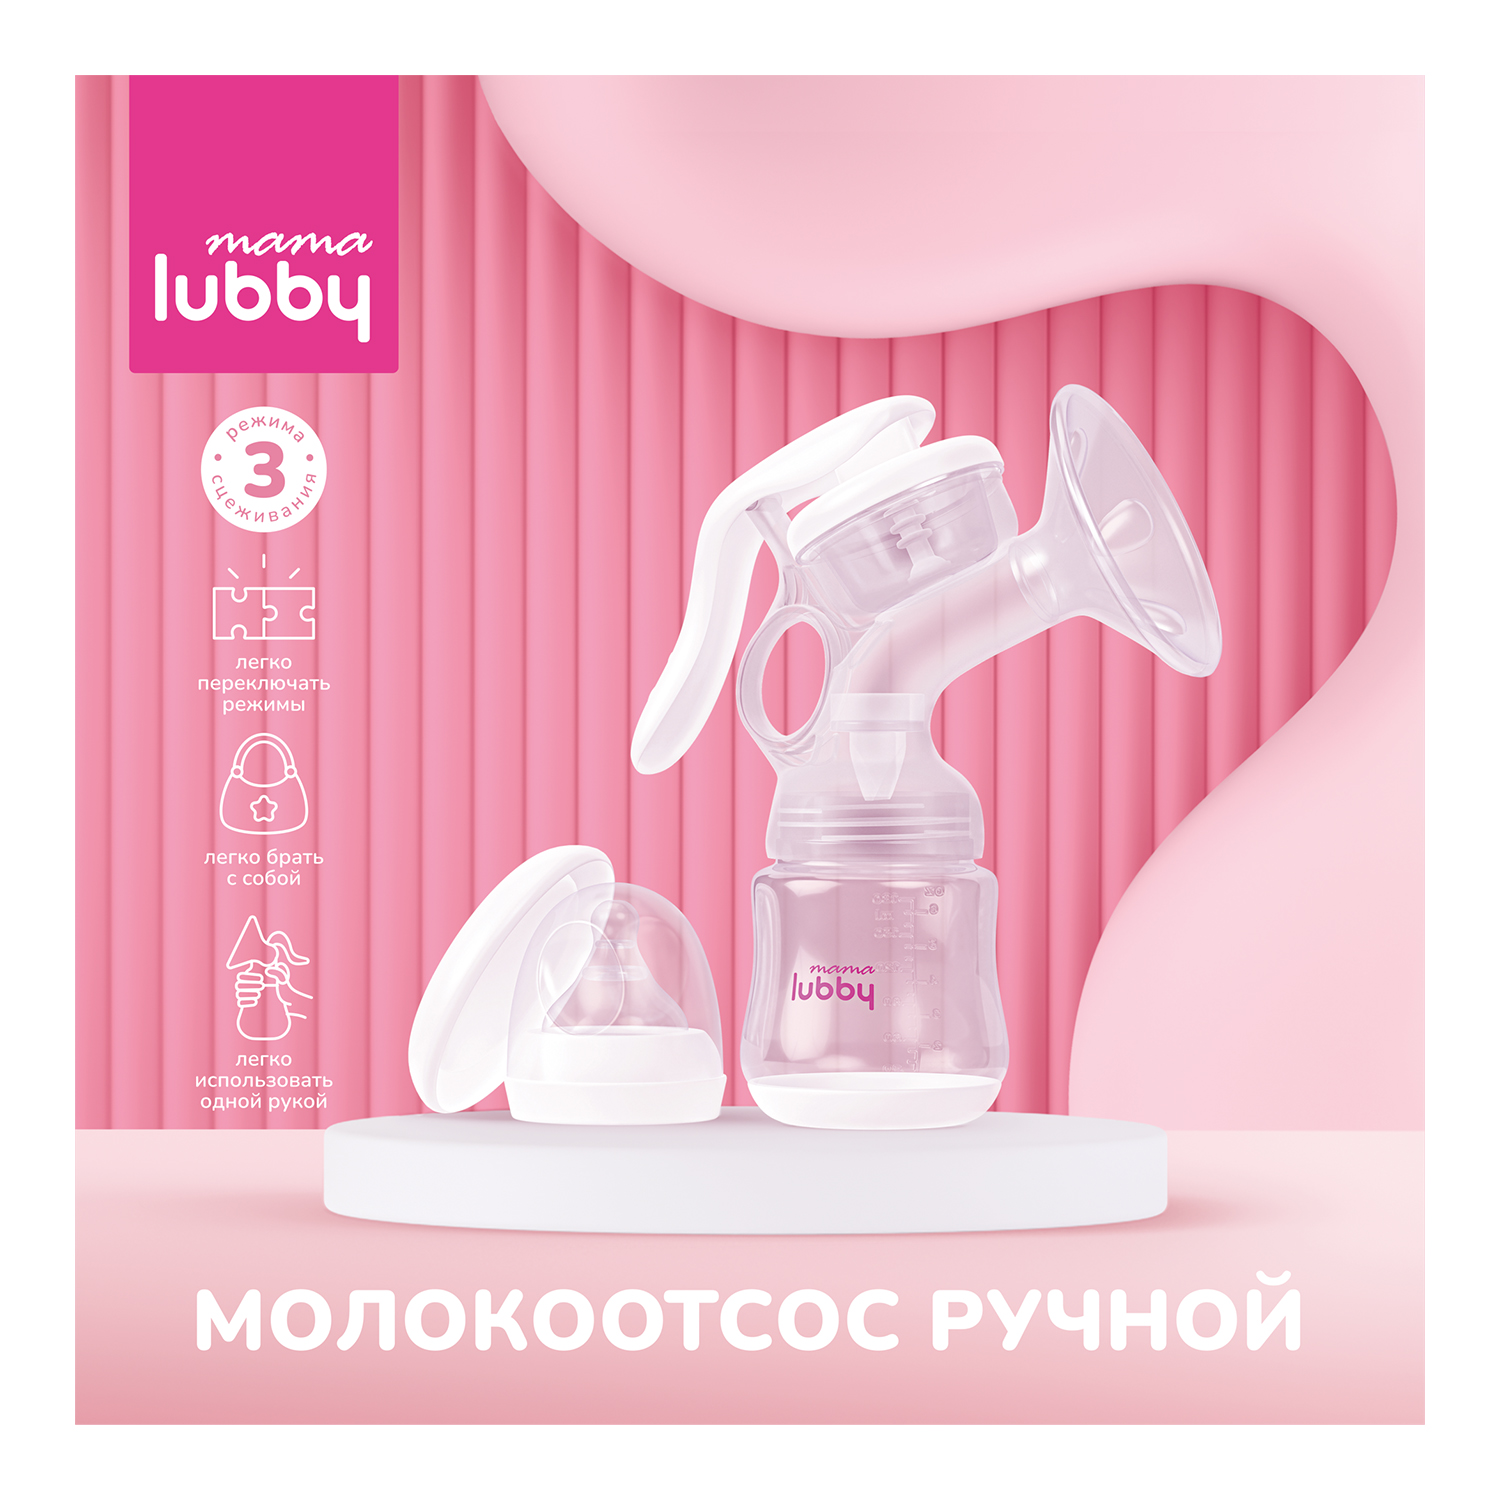 Молокоотсос ручной mama lubby, 3 режима, с аксессуарами молокоотсос ручной mama lubby 29843